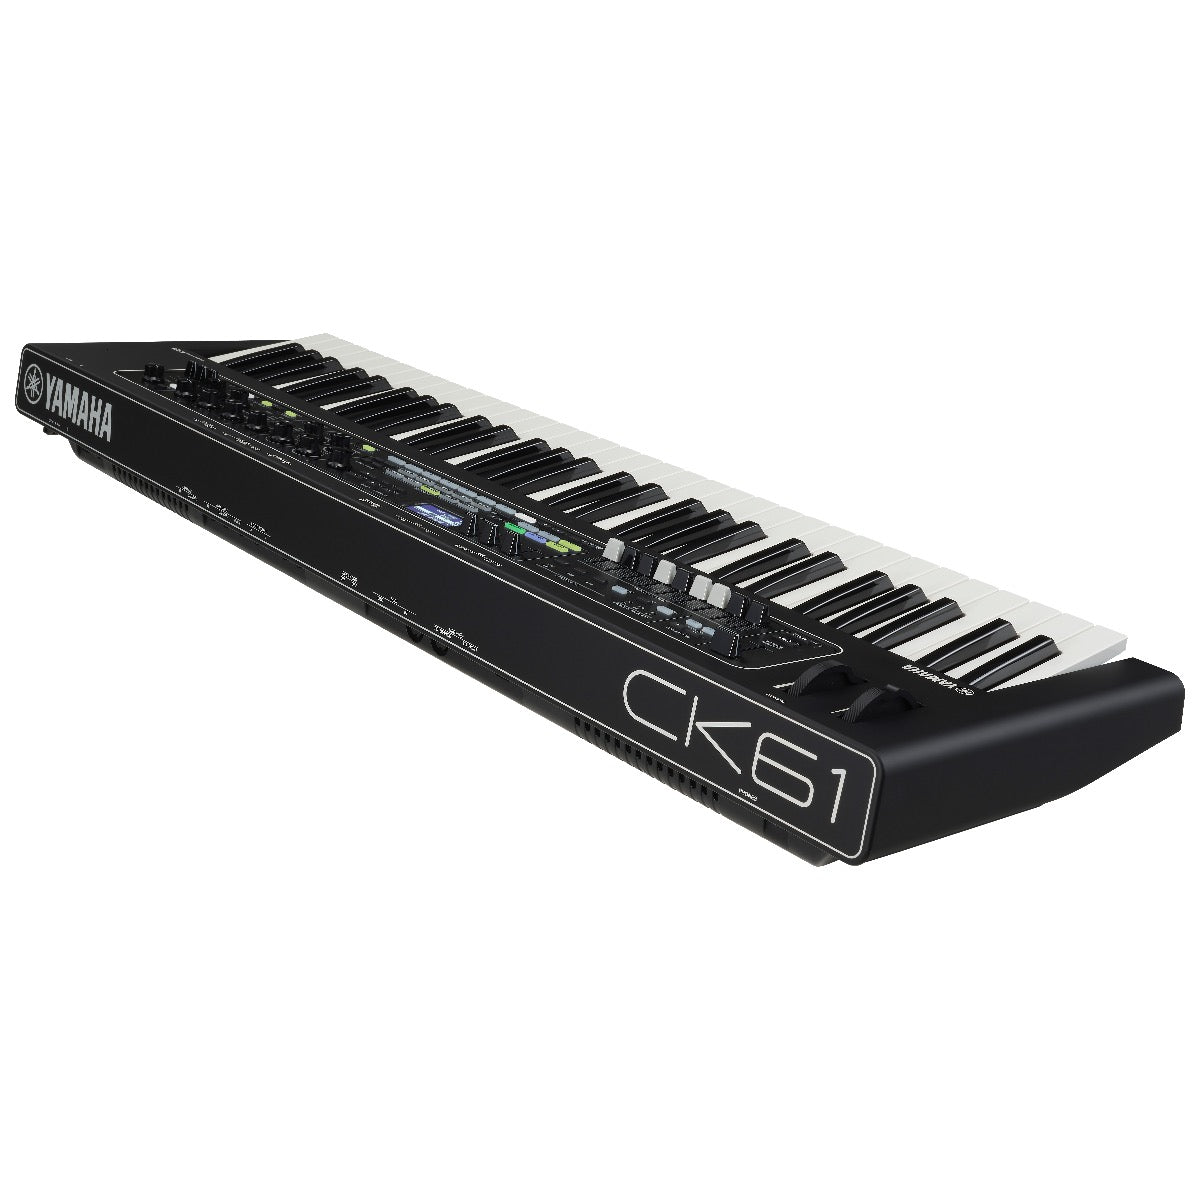 Yamaha CK61 Stage Keyboard - View 16